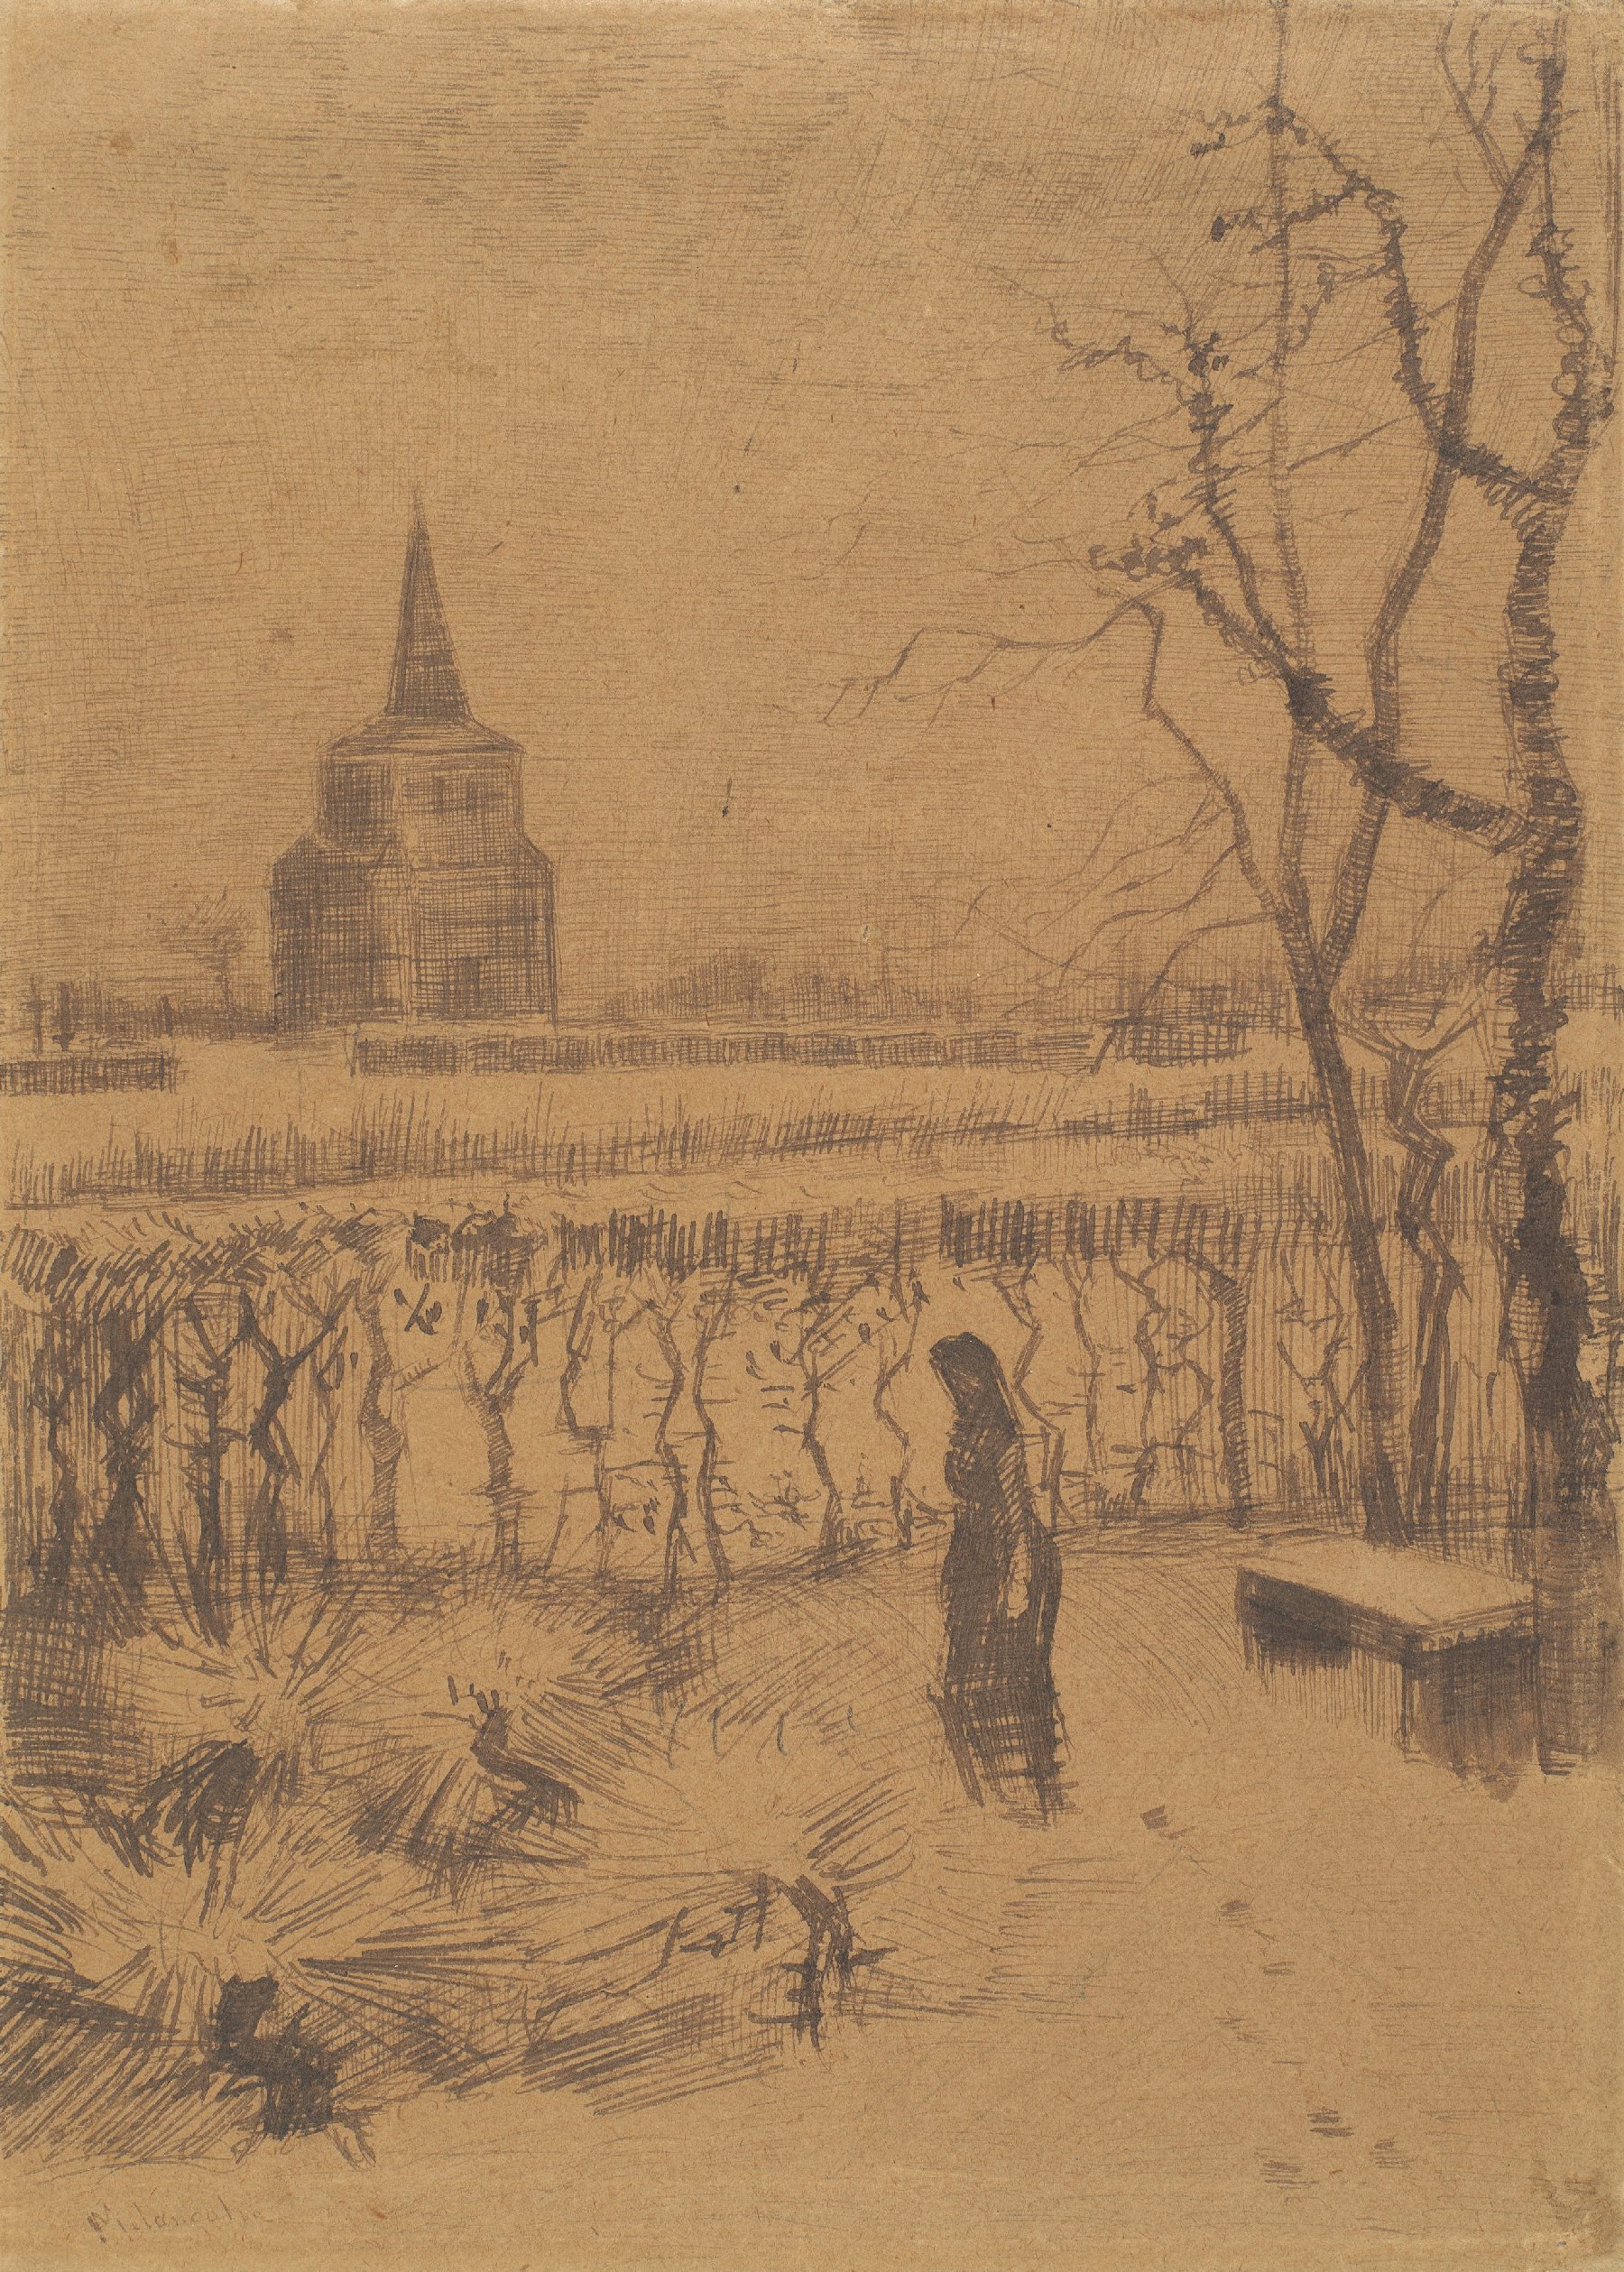 Melancholie Vincent van Gogh (1853 - 1890), Nuenen, december 1883